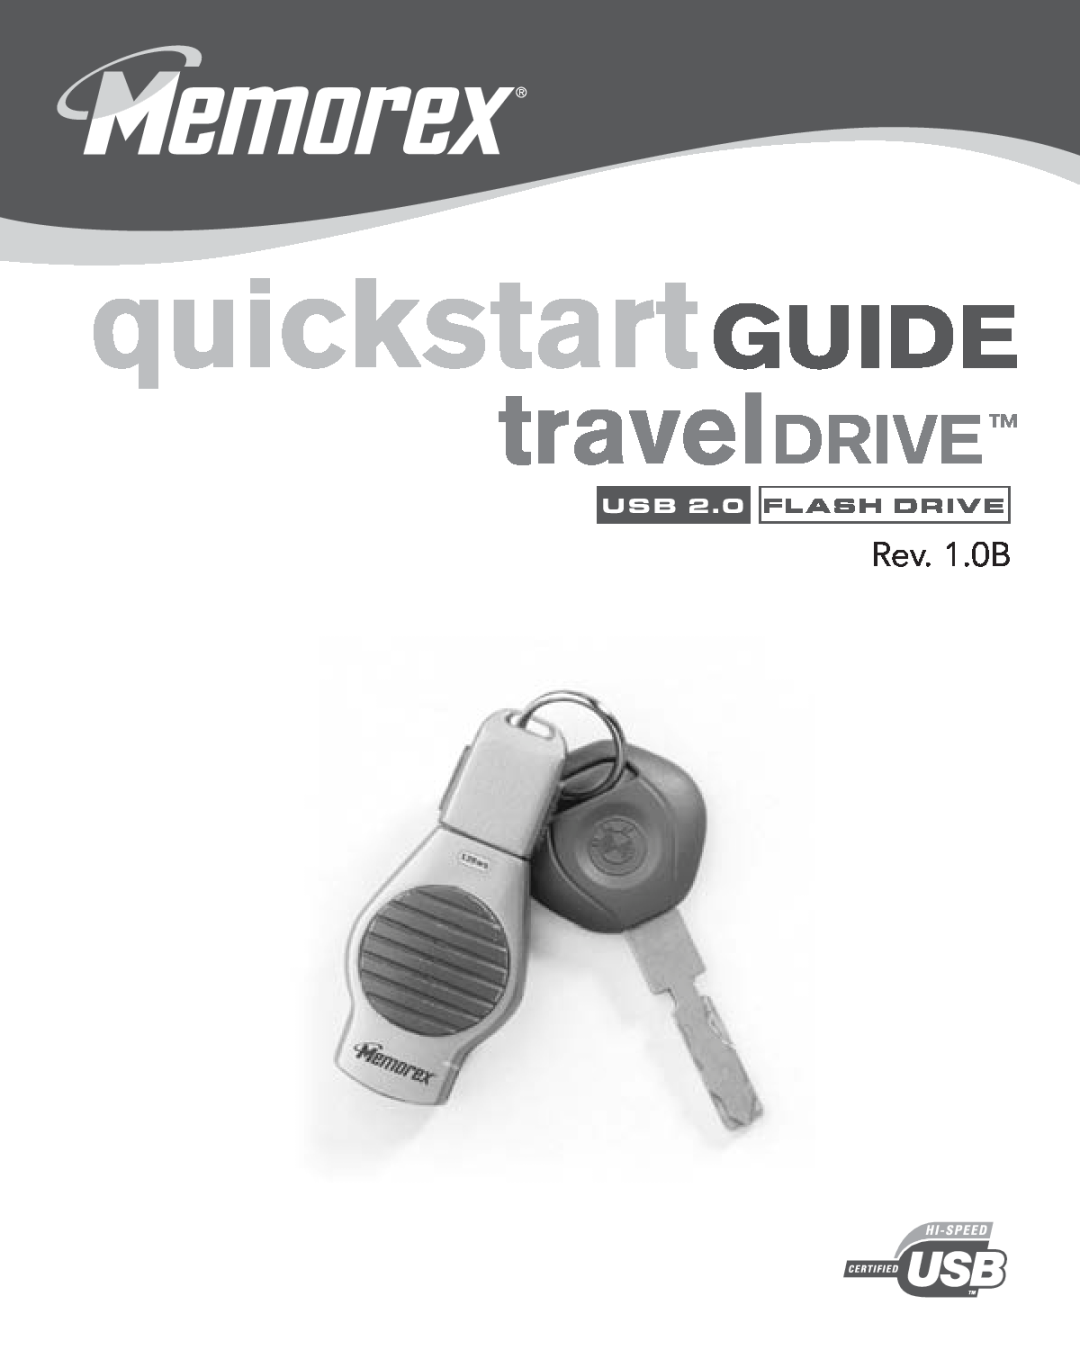 Memorex USB Flash Drive manual travelDRIVE, Rev. 1.0B 